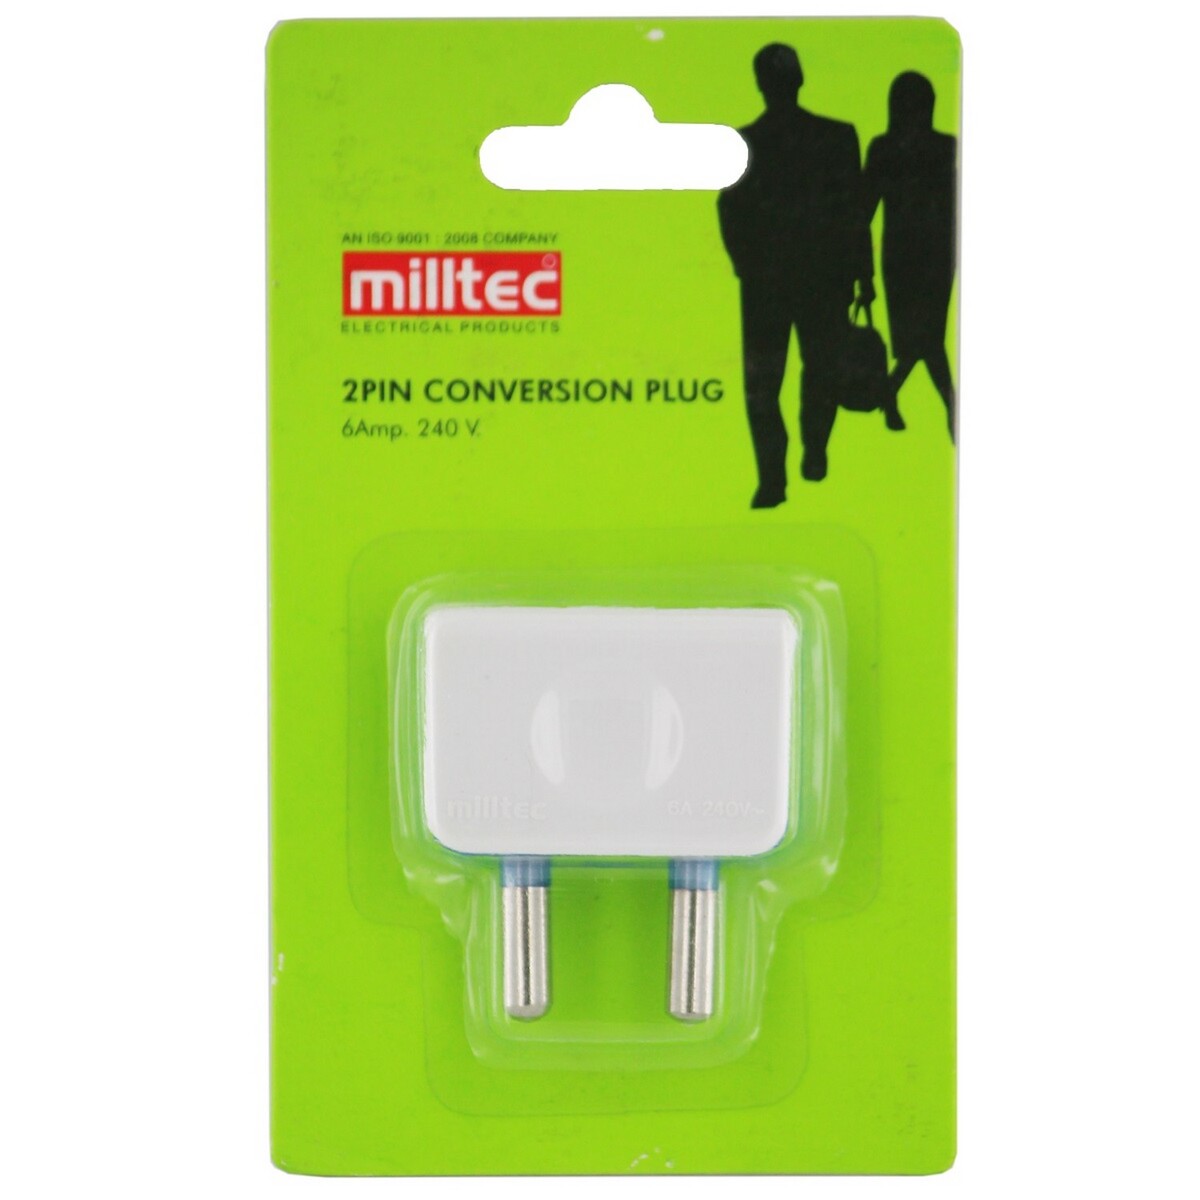 Milltech Convertion Plug 2Pin 1068